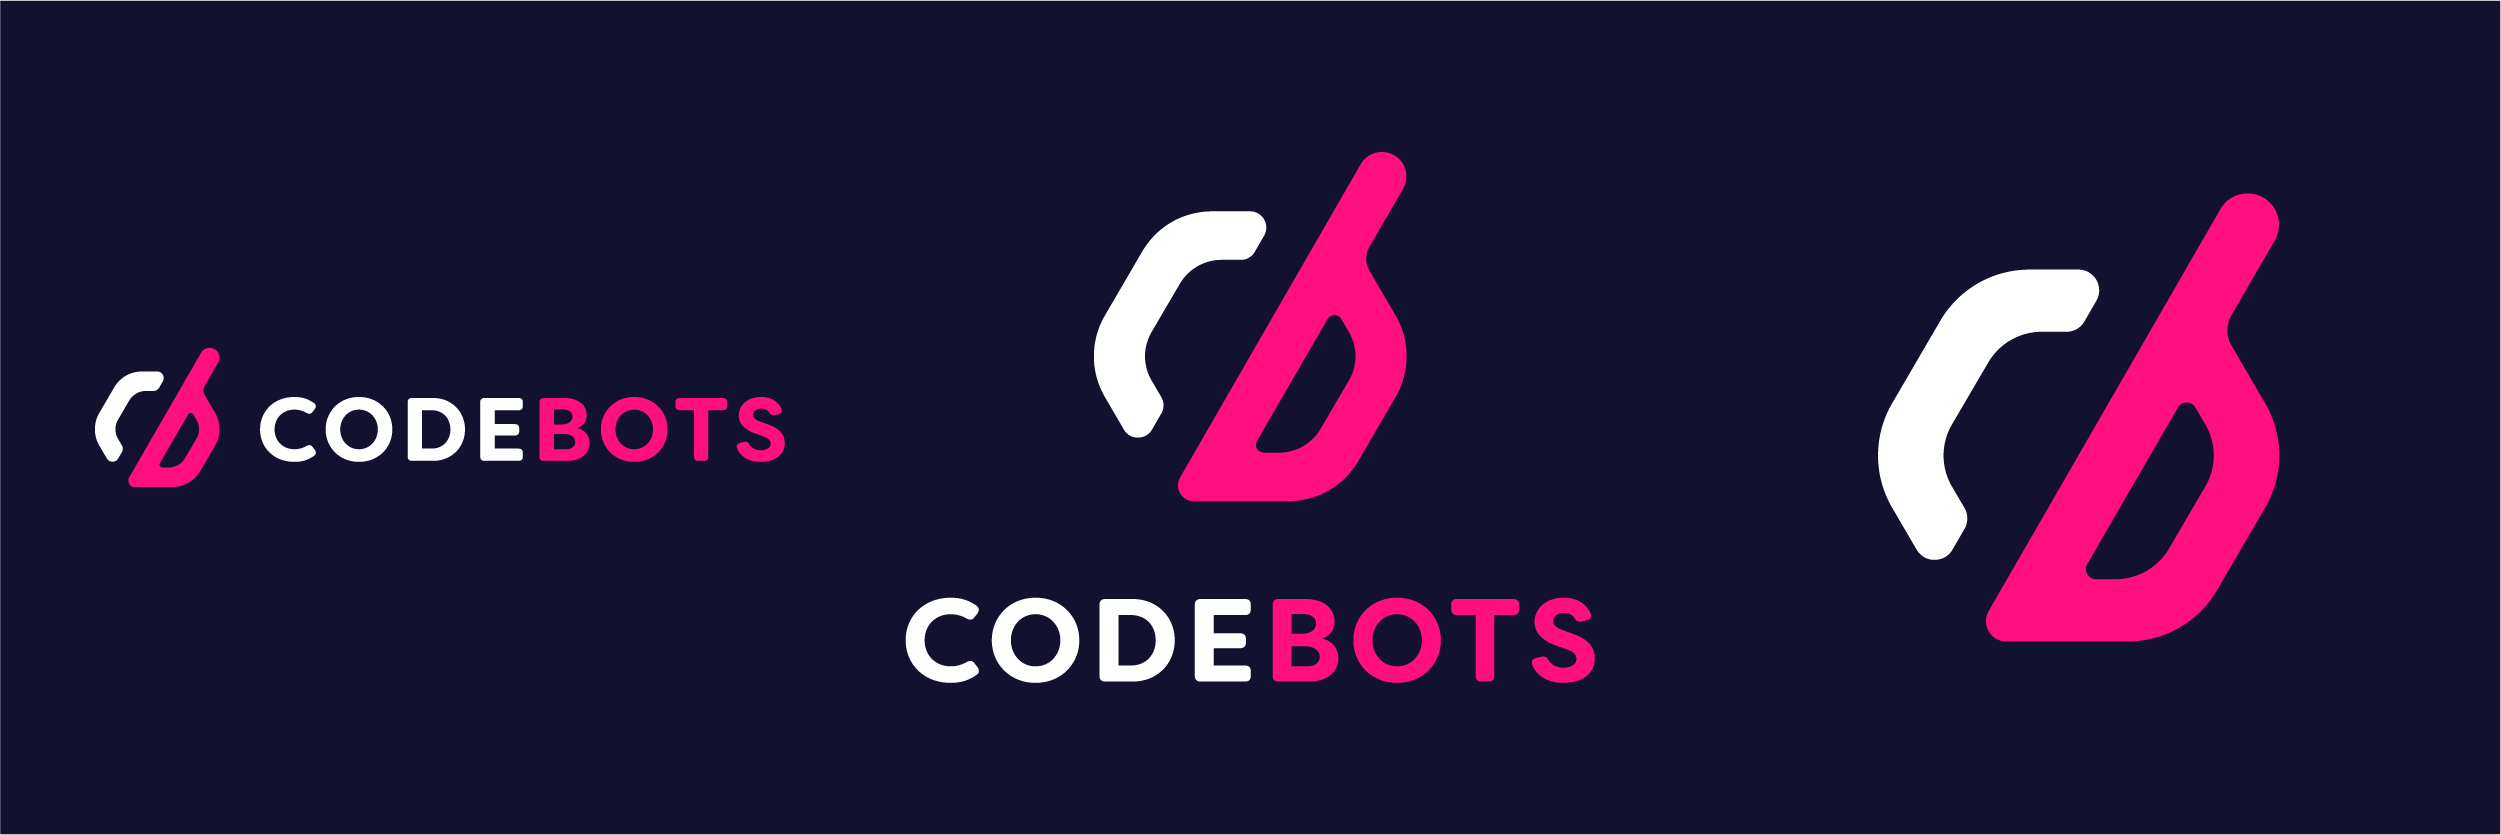 Codebots light logo